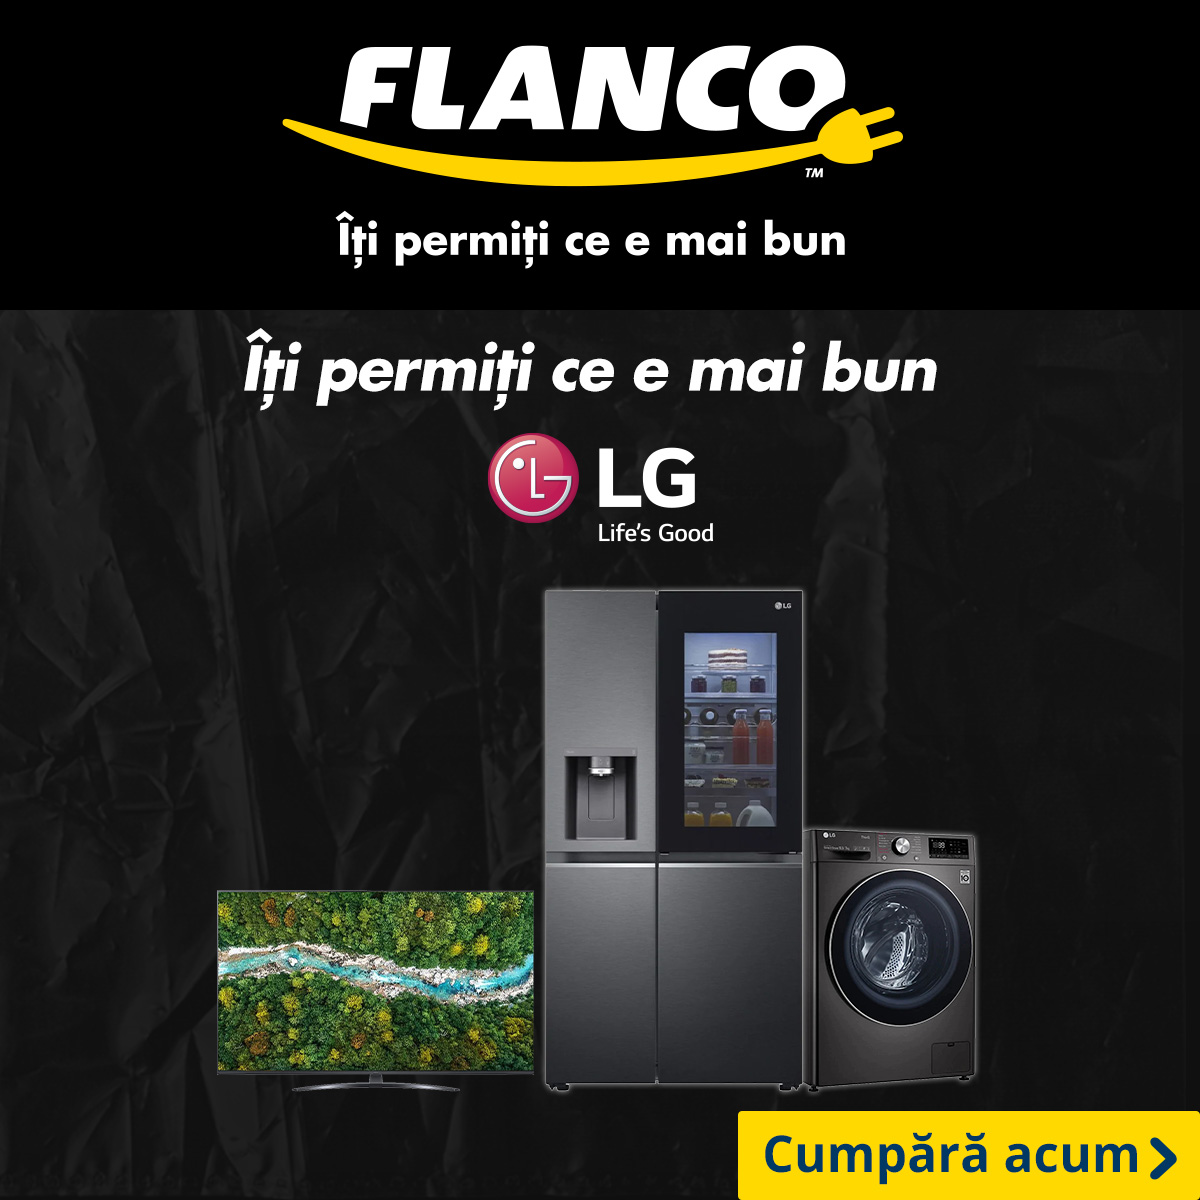 Flanco - LG in Black Friday